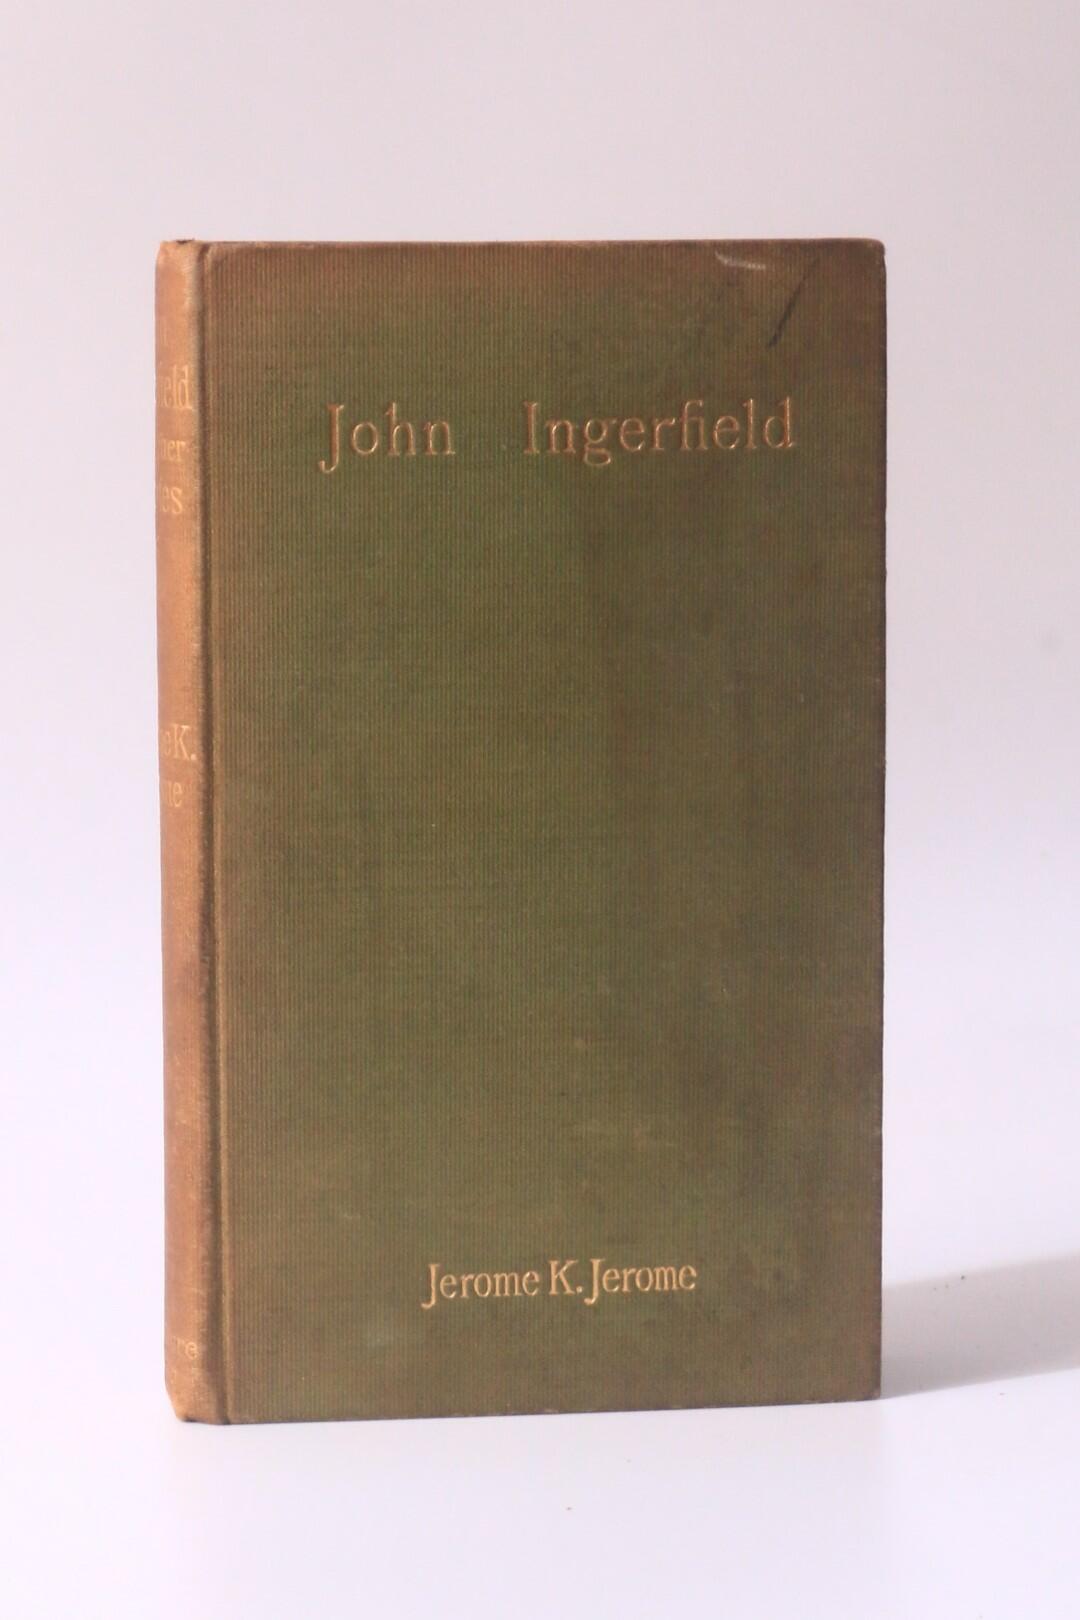 Jerome K. Jerome - John Ingerfield - McClure & Co., 1894, First Edition.